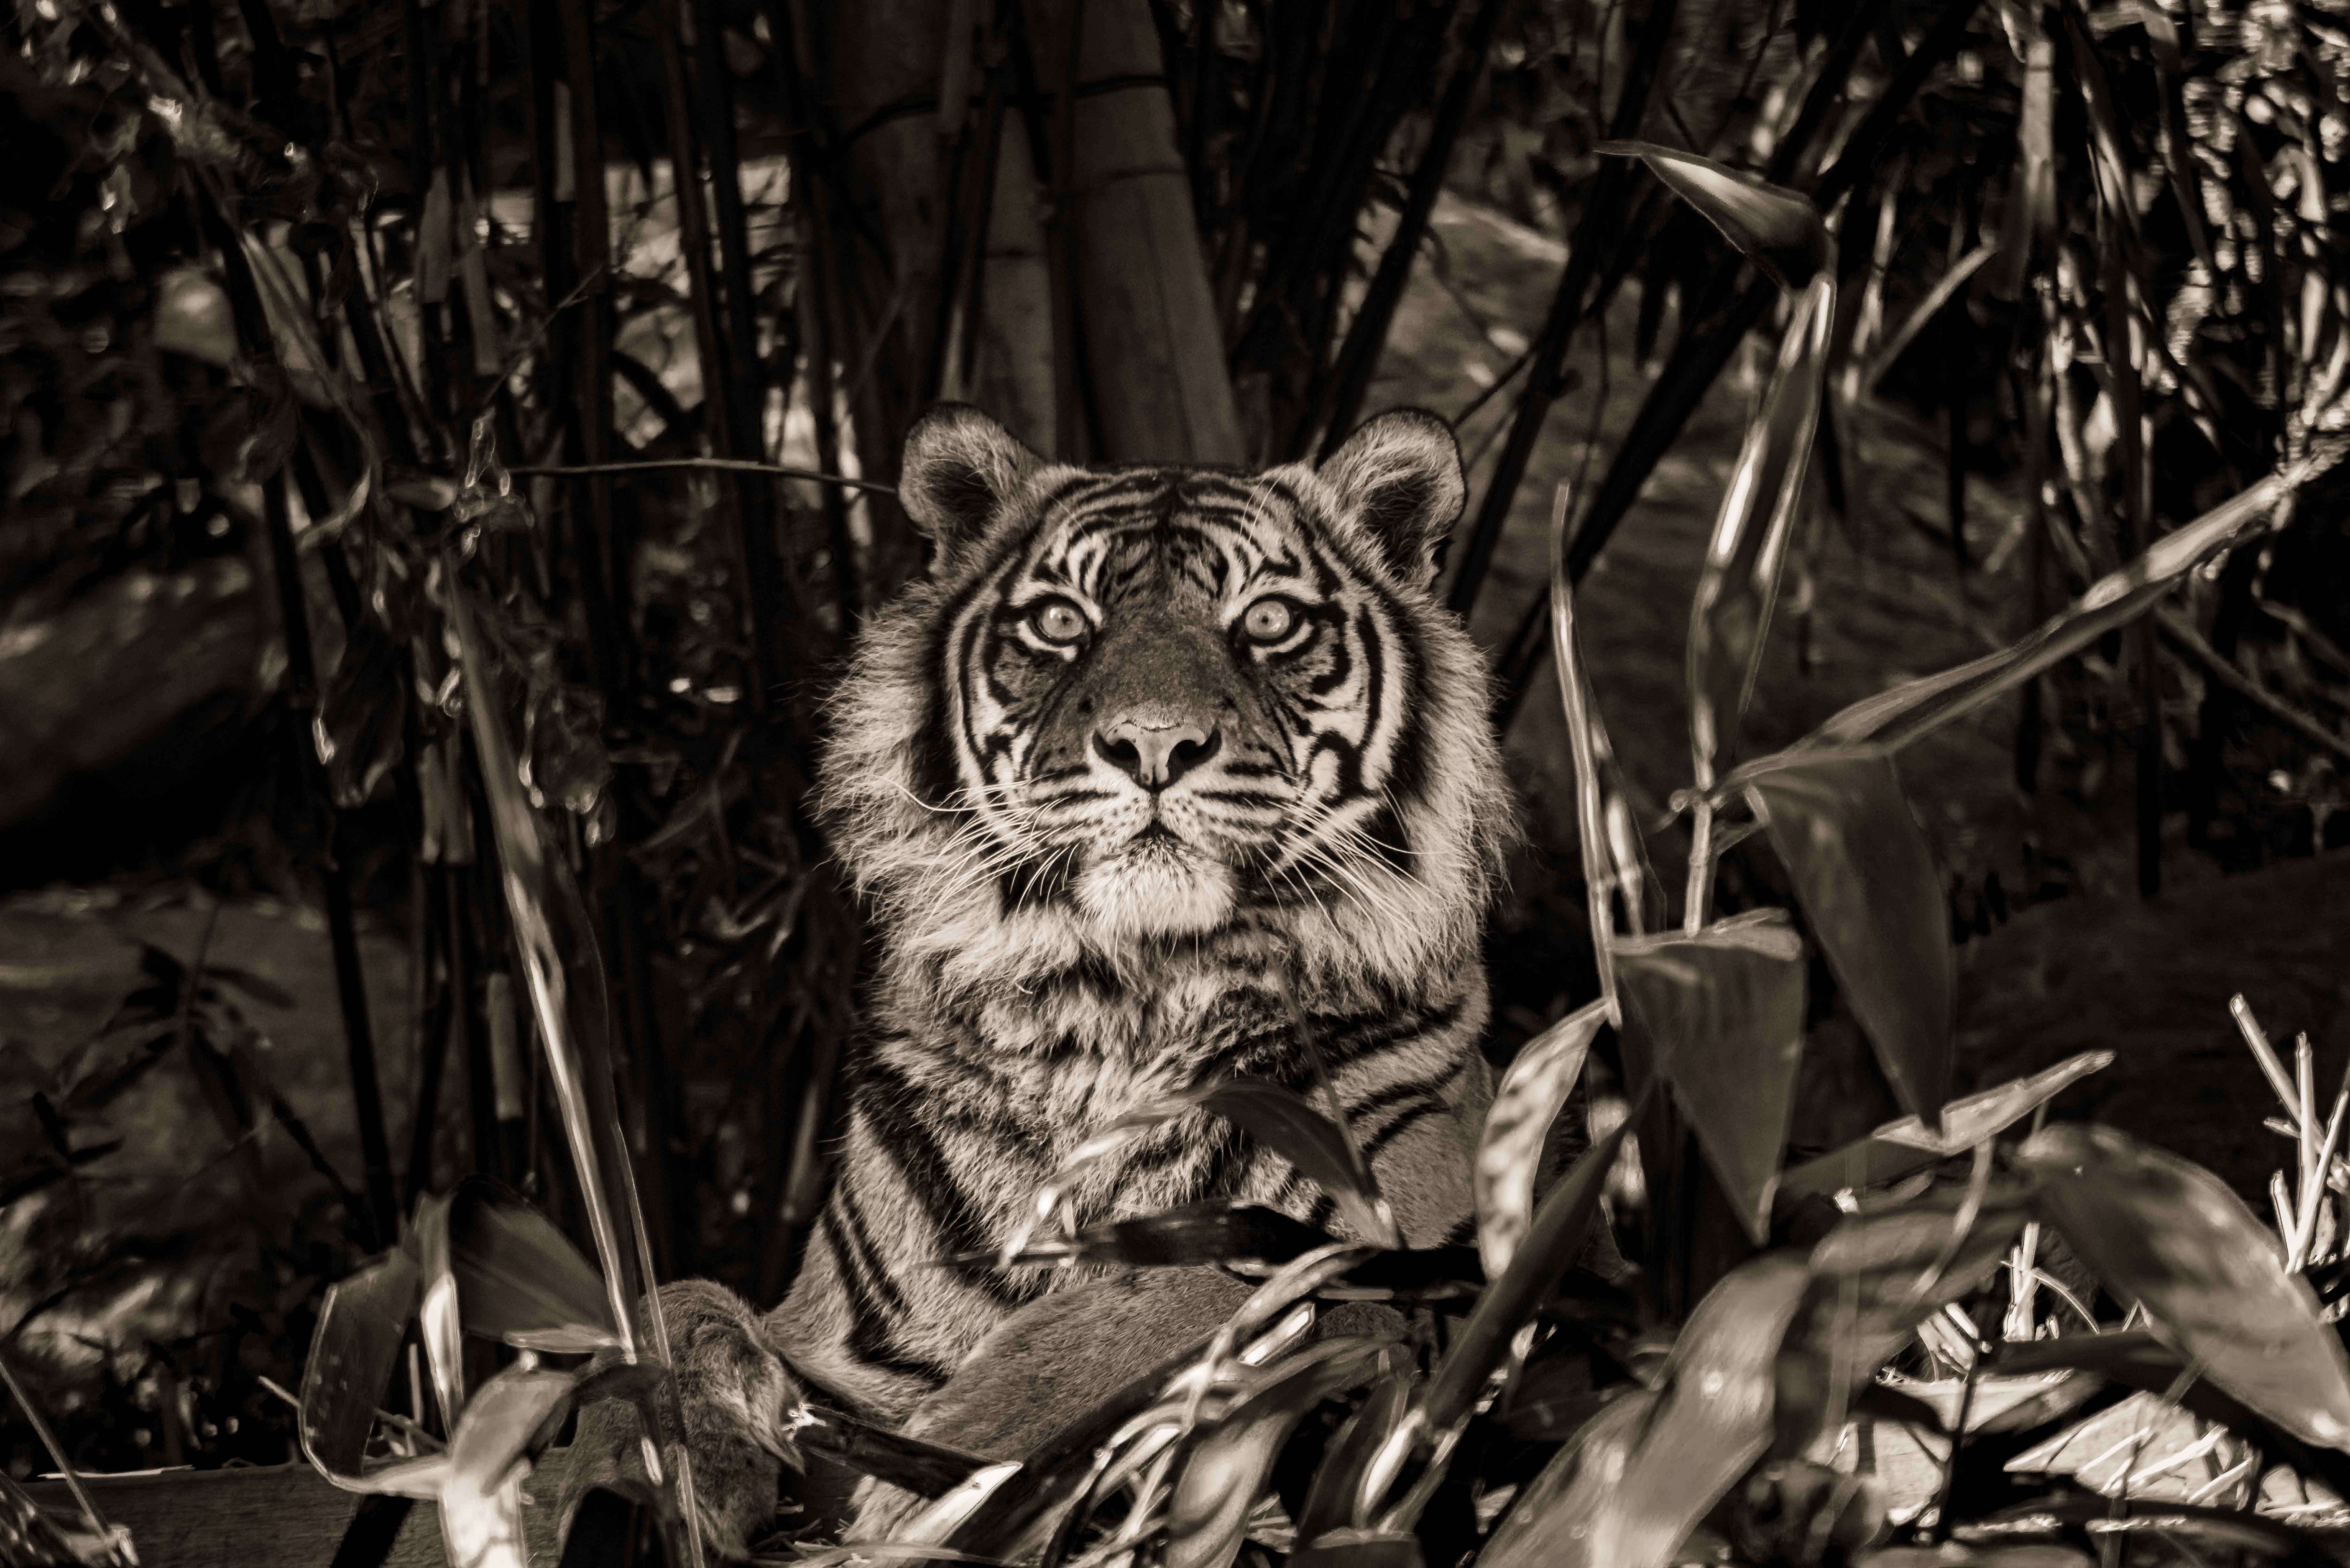 SEMD210 - DSC_7507 Sepia - 
Sumatran Tiger, Taronga Zoo,  Sydney, NSW, Australia.
1st July 2020 - 1.16pm
Camera - Nikon D800 
F5.6 - ISO 1000 - 1/250 second - Focal Length 300mm : Wildlife - Sepia : Stephen E-Moran - Fine Art Photography